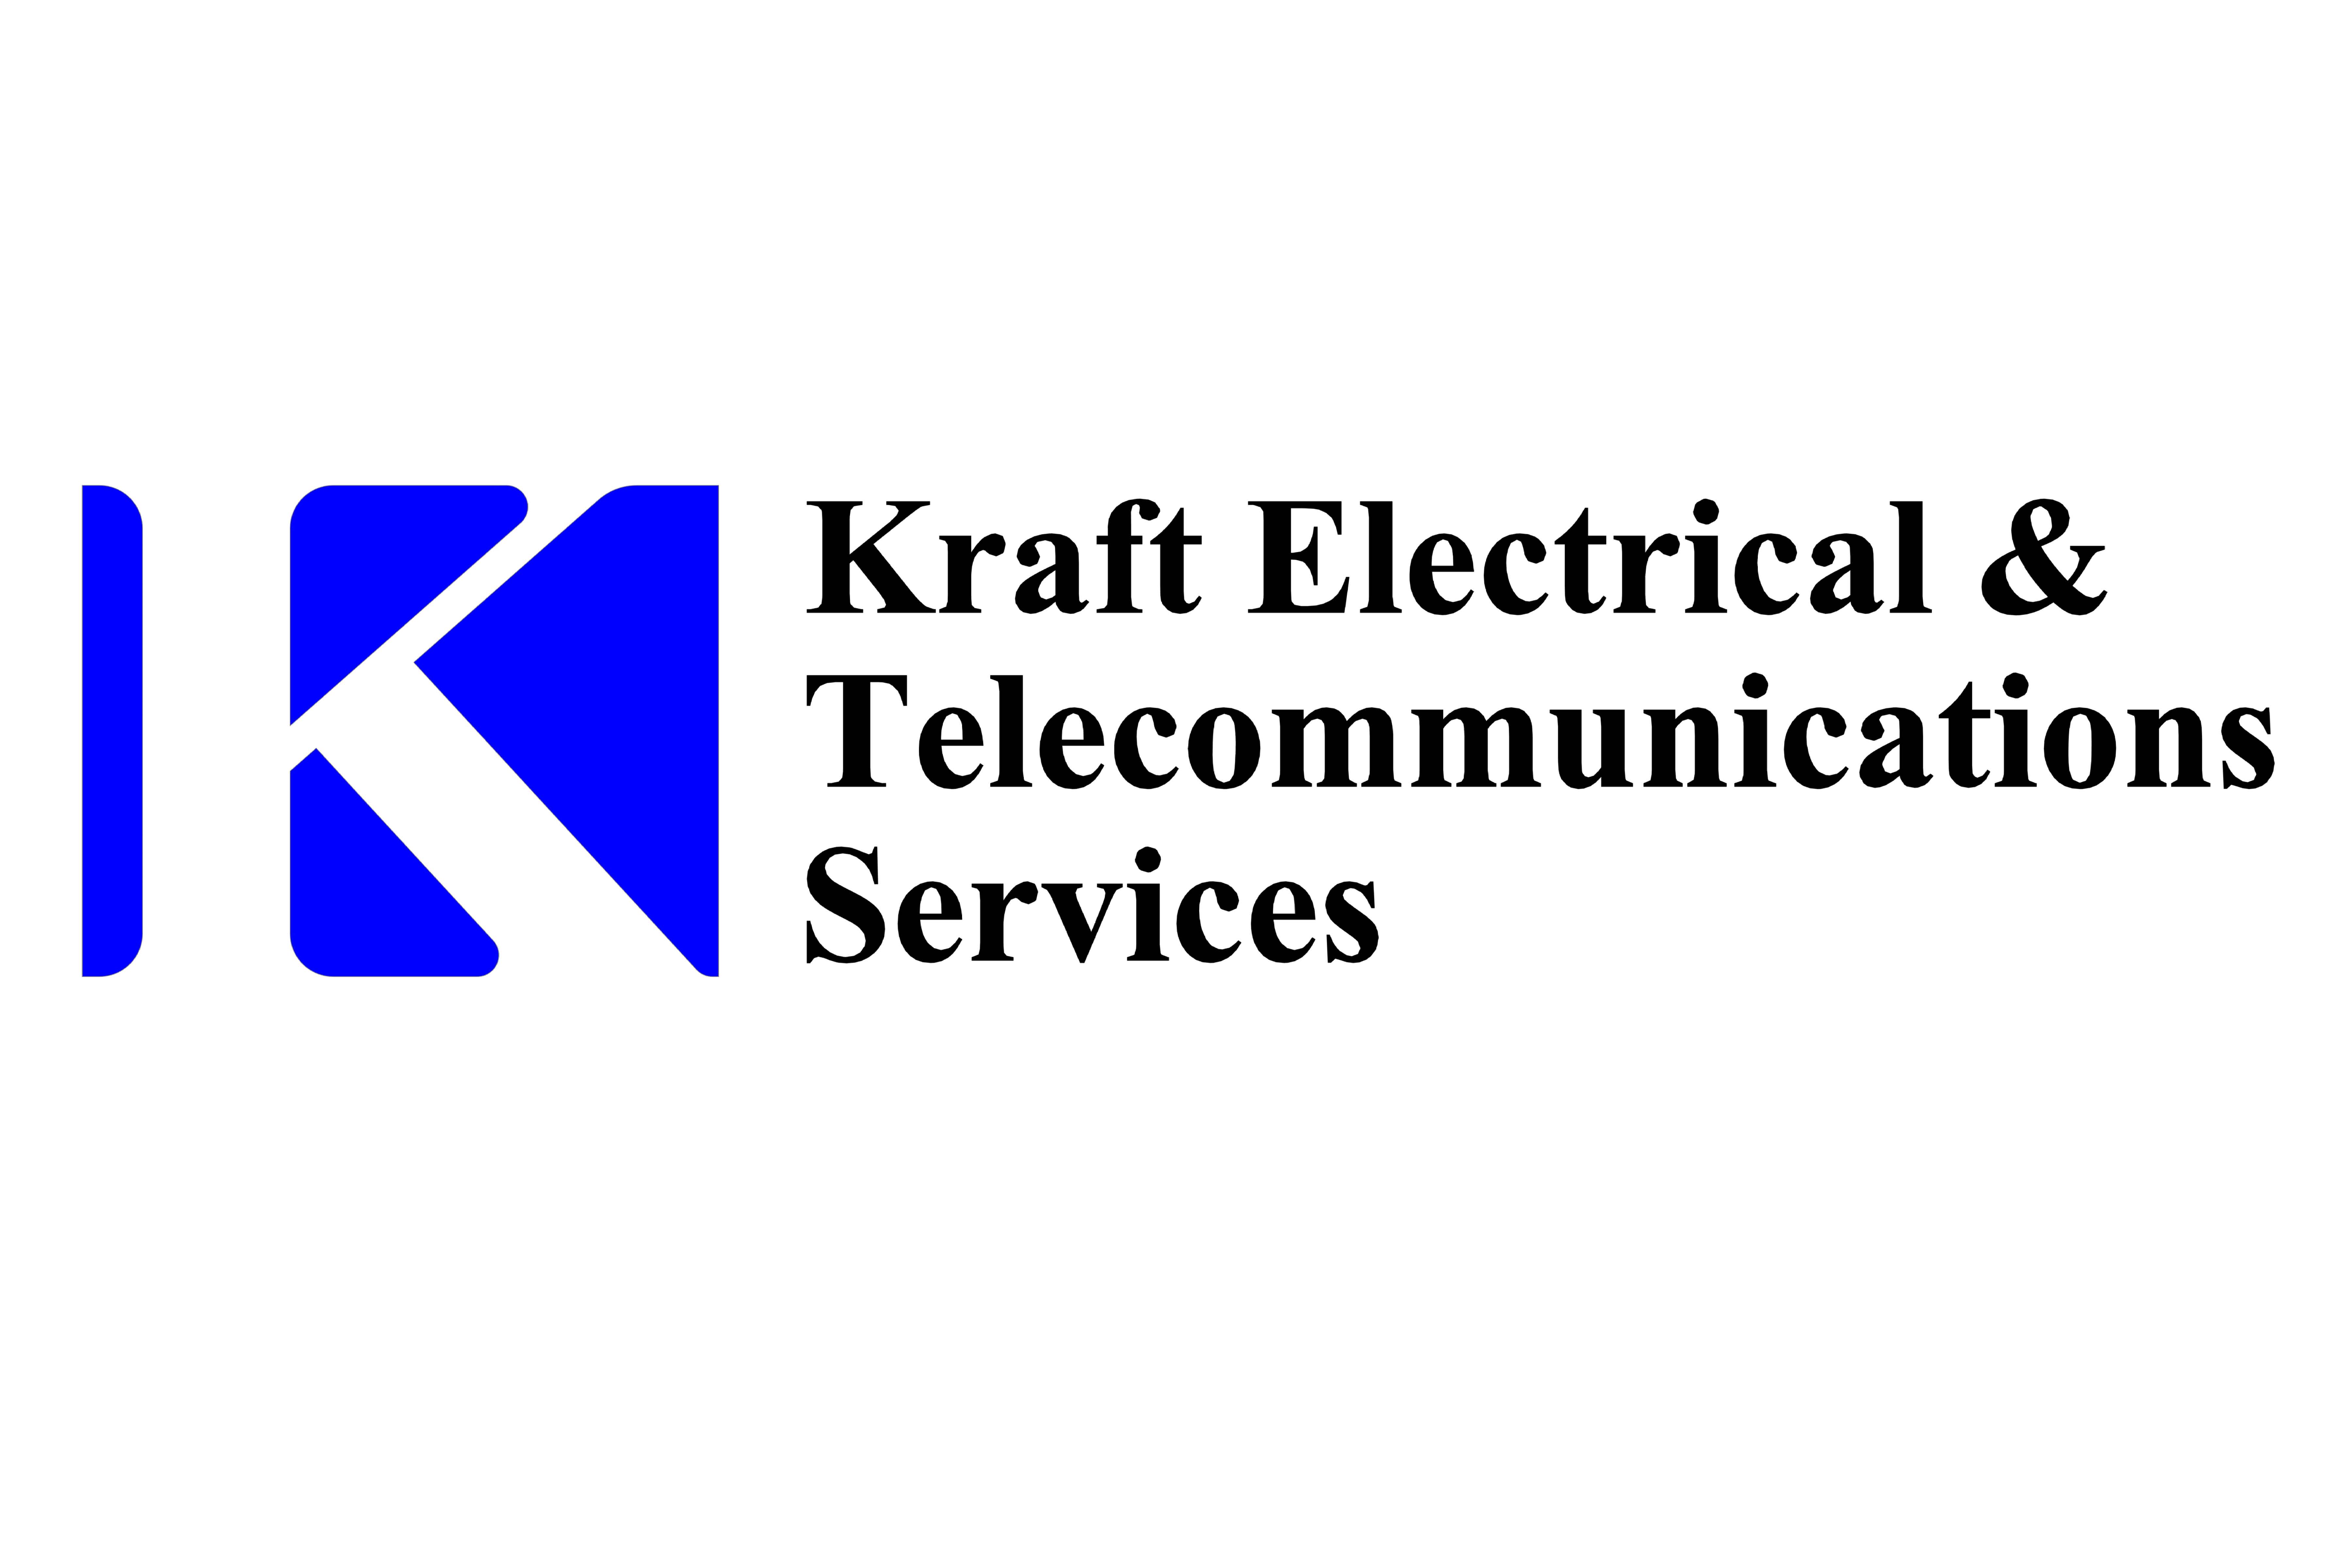 Kraft Electric